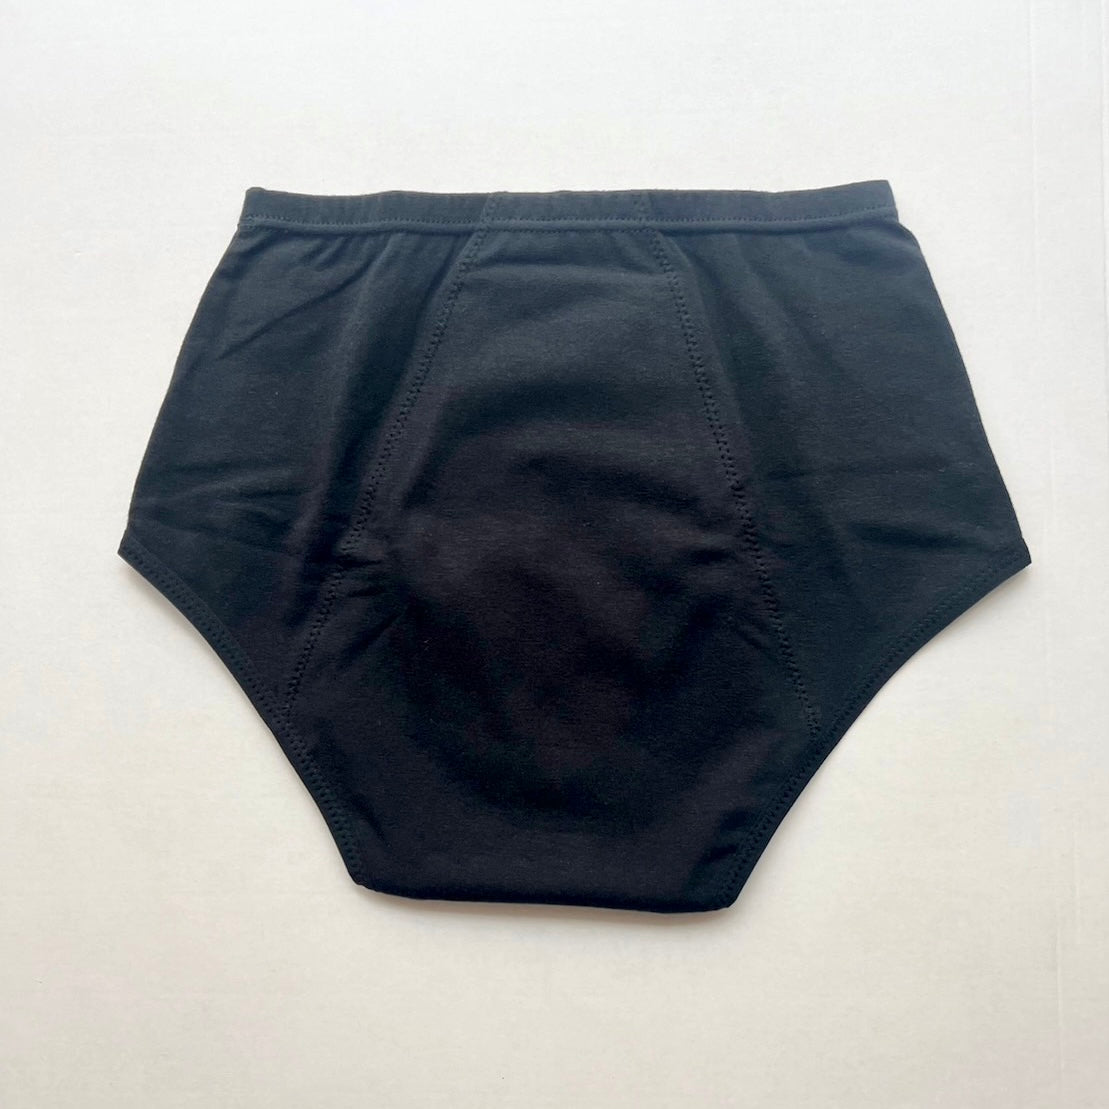 Hogara 生理用吸水ショーツ / Period Underwear – minimal living tokyo.